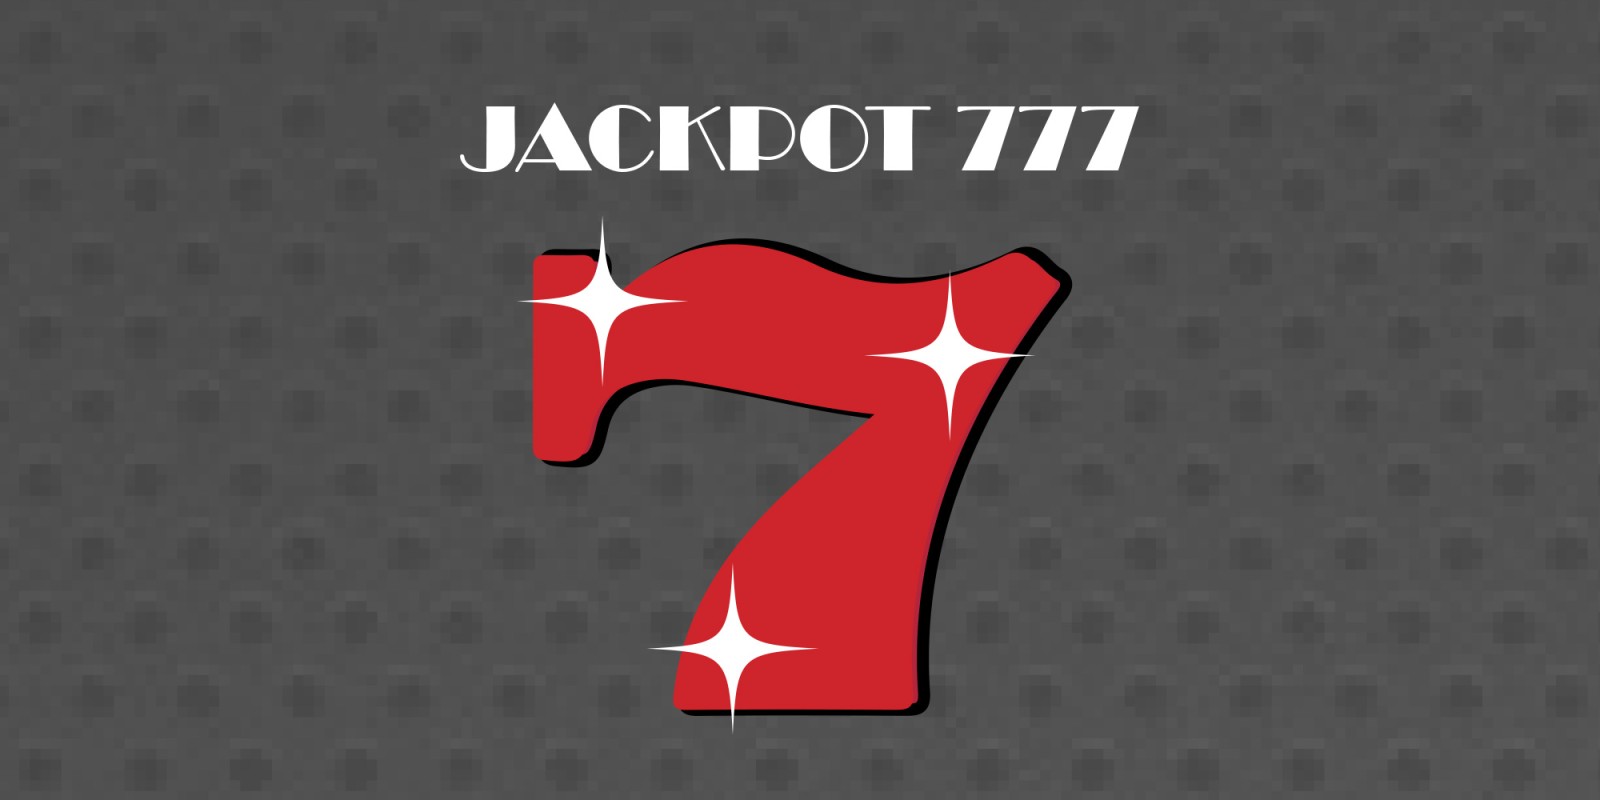 JACKPOT 777